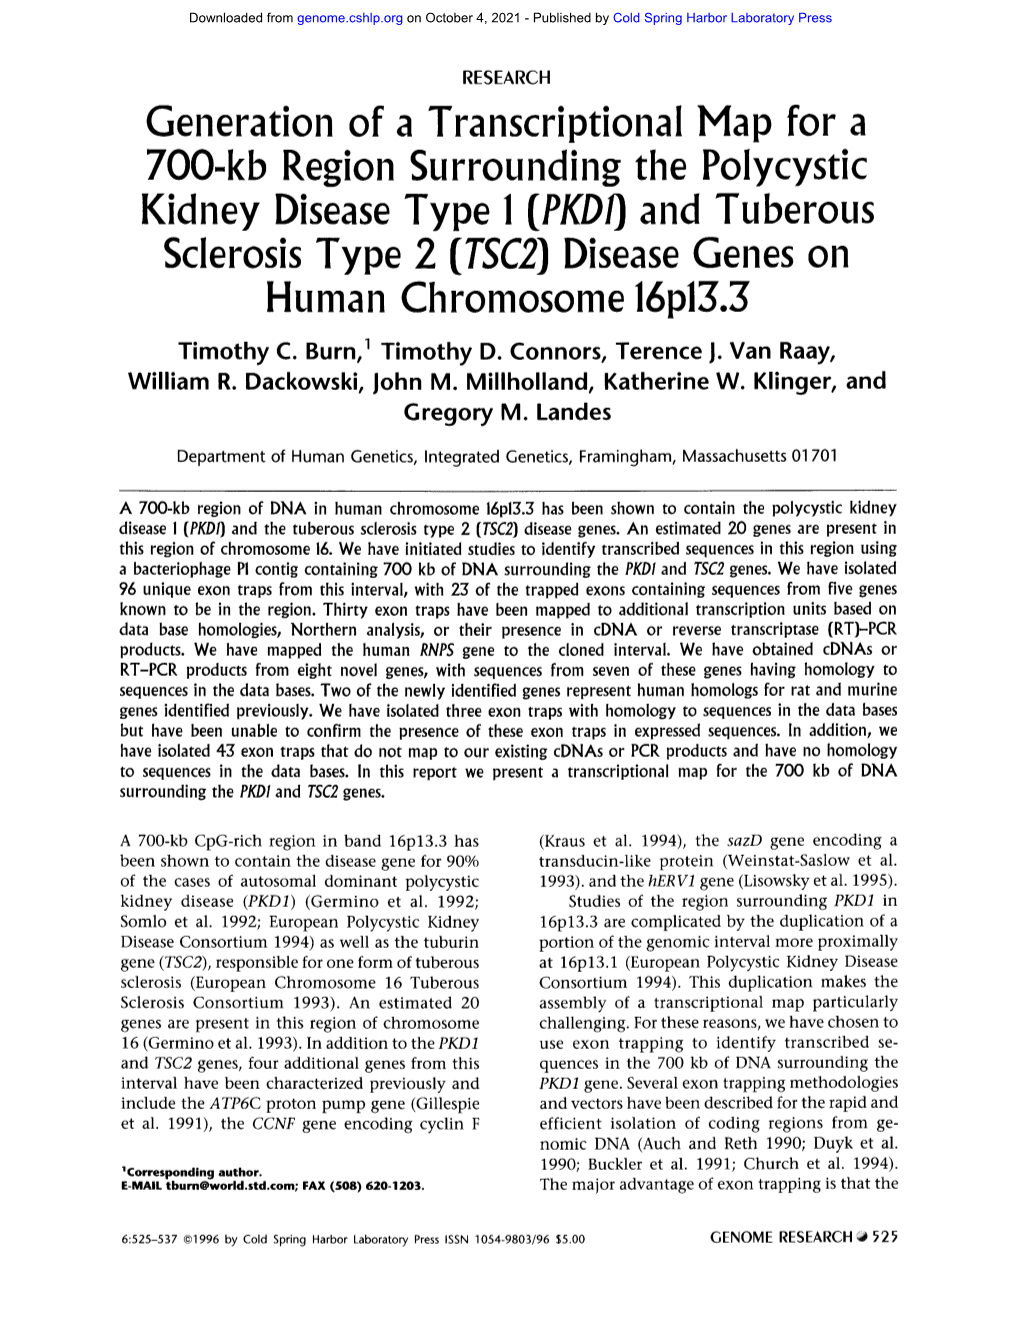 Kidney Disease Type 1 (PKDO and Tuberous Sclerosis Type 2 (TSC2) Disease Genes on Human Chromosome 16P13.3 Timothy C